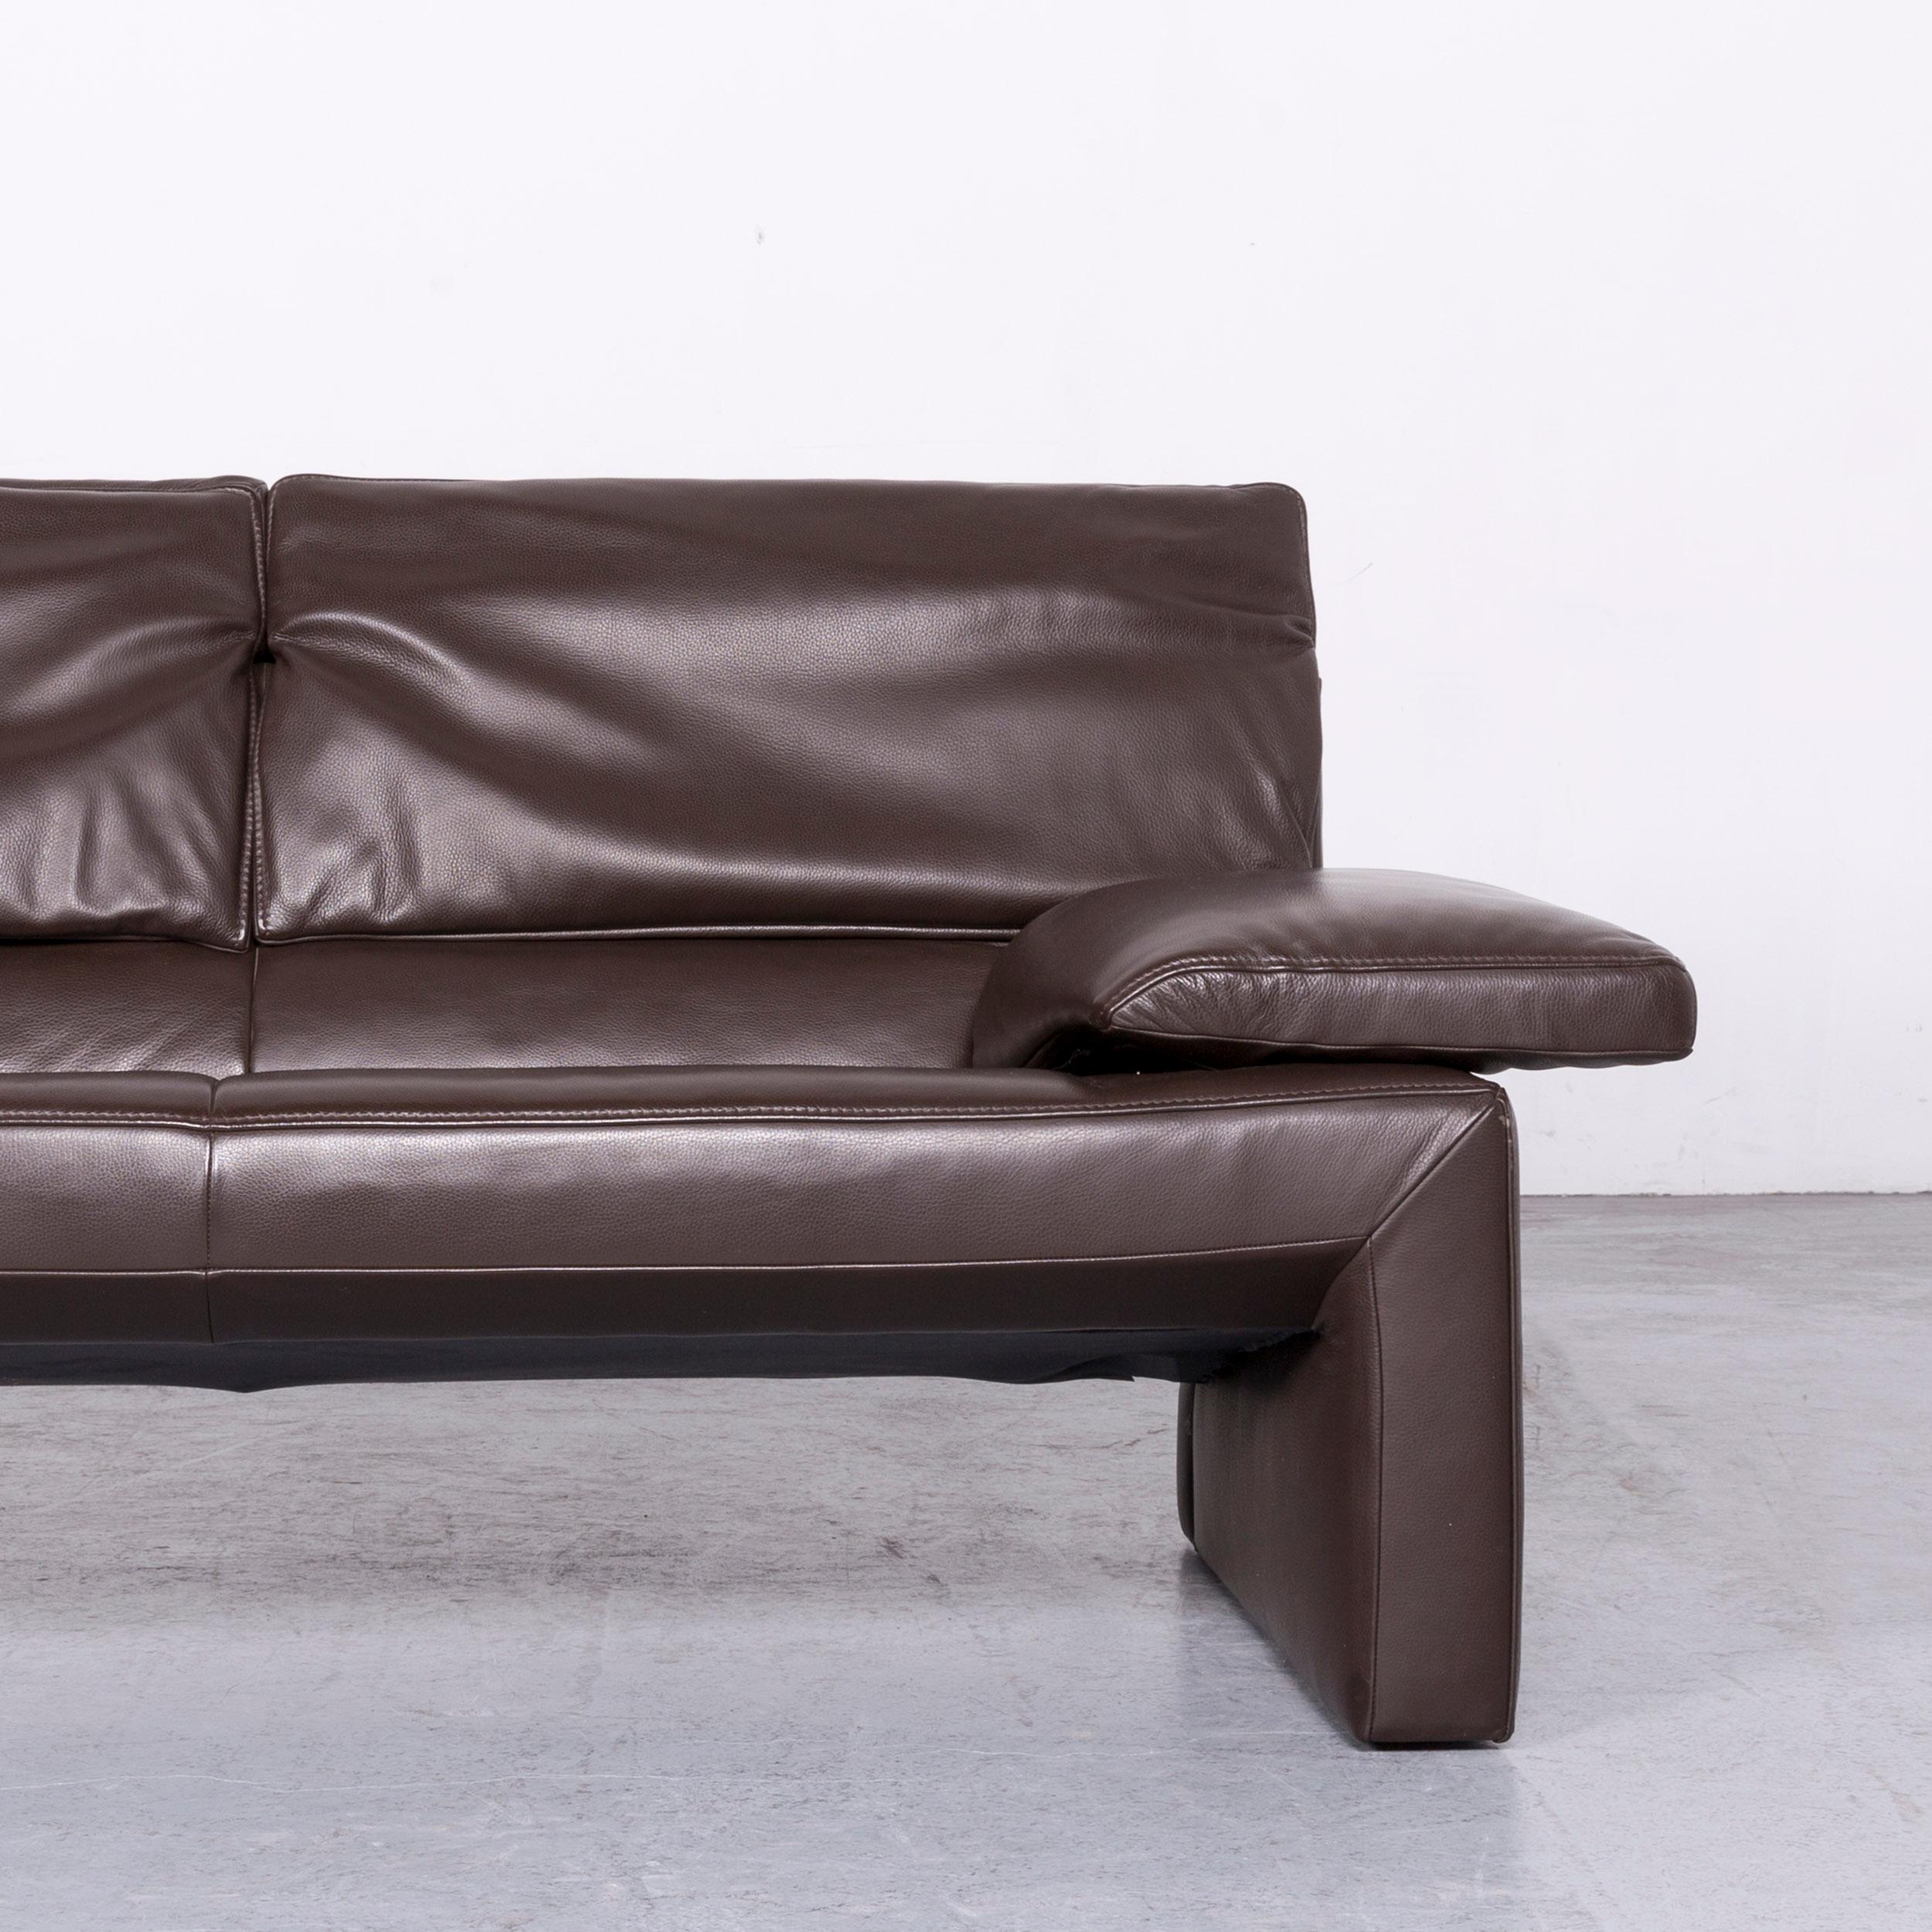 Jori Espalda Designer Leather Sofa Brown Two-Seat Couch For Sale 3